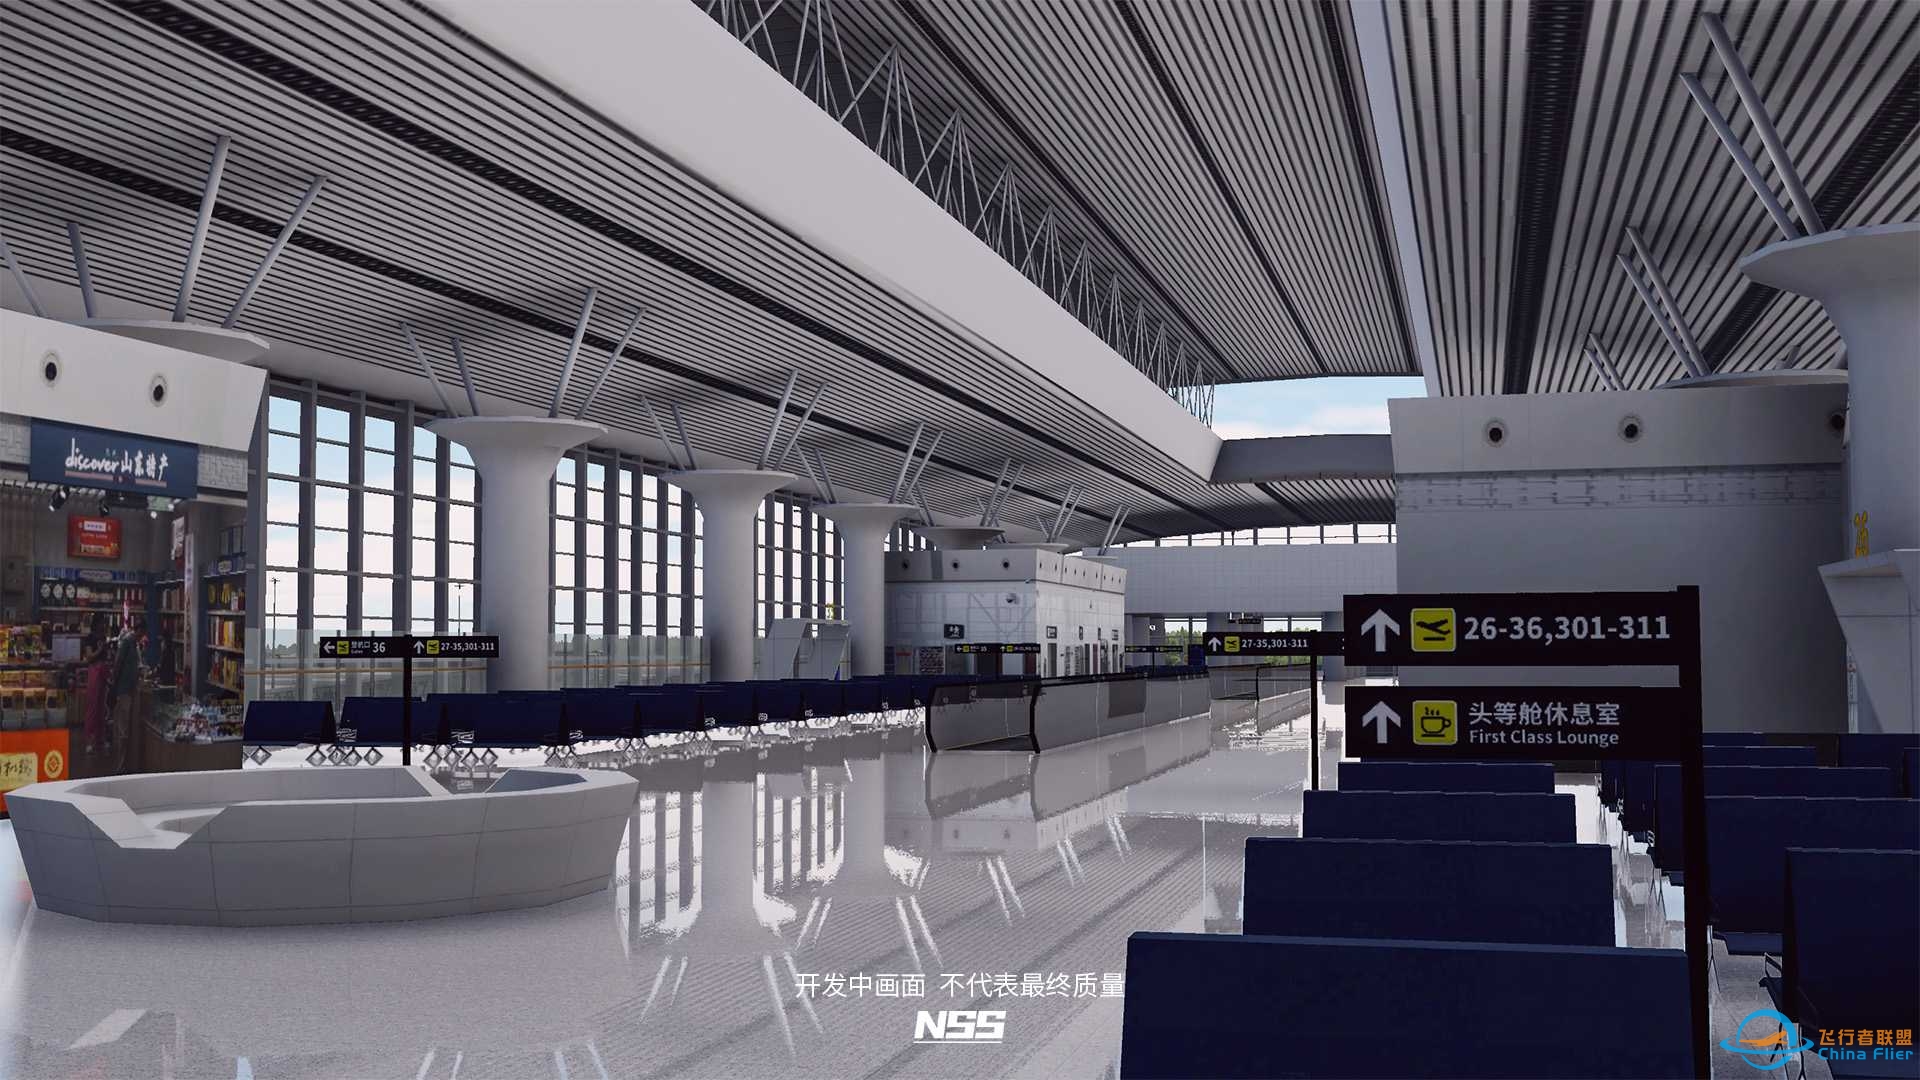 NSS地景开发组 | ZSJN | 济南遥墙国际机场项目最新进展-4814 